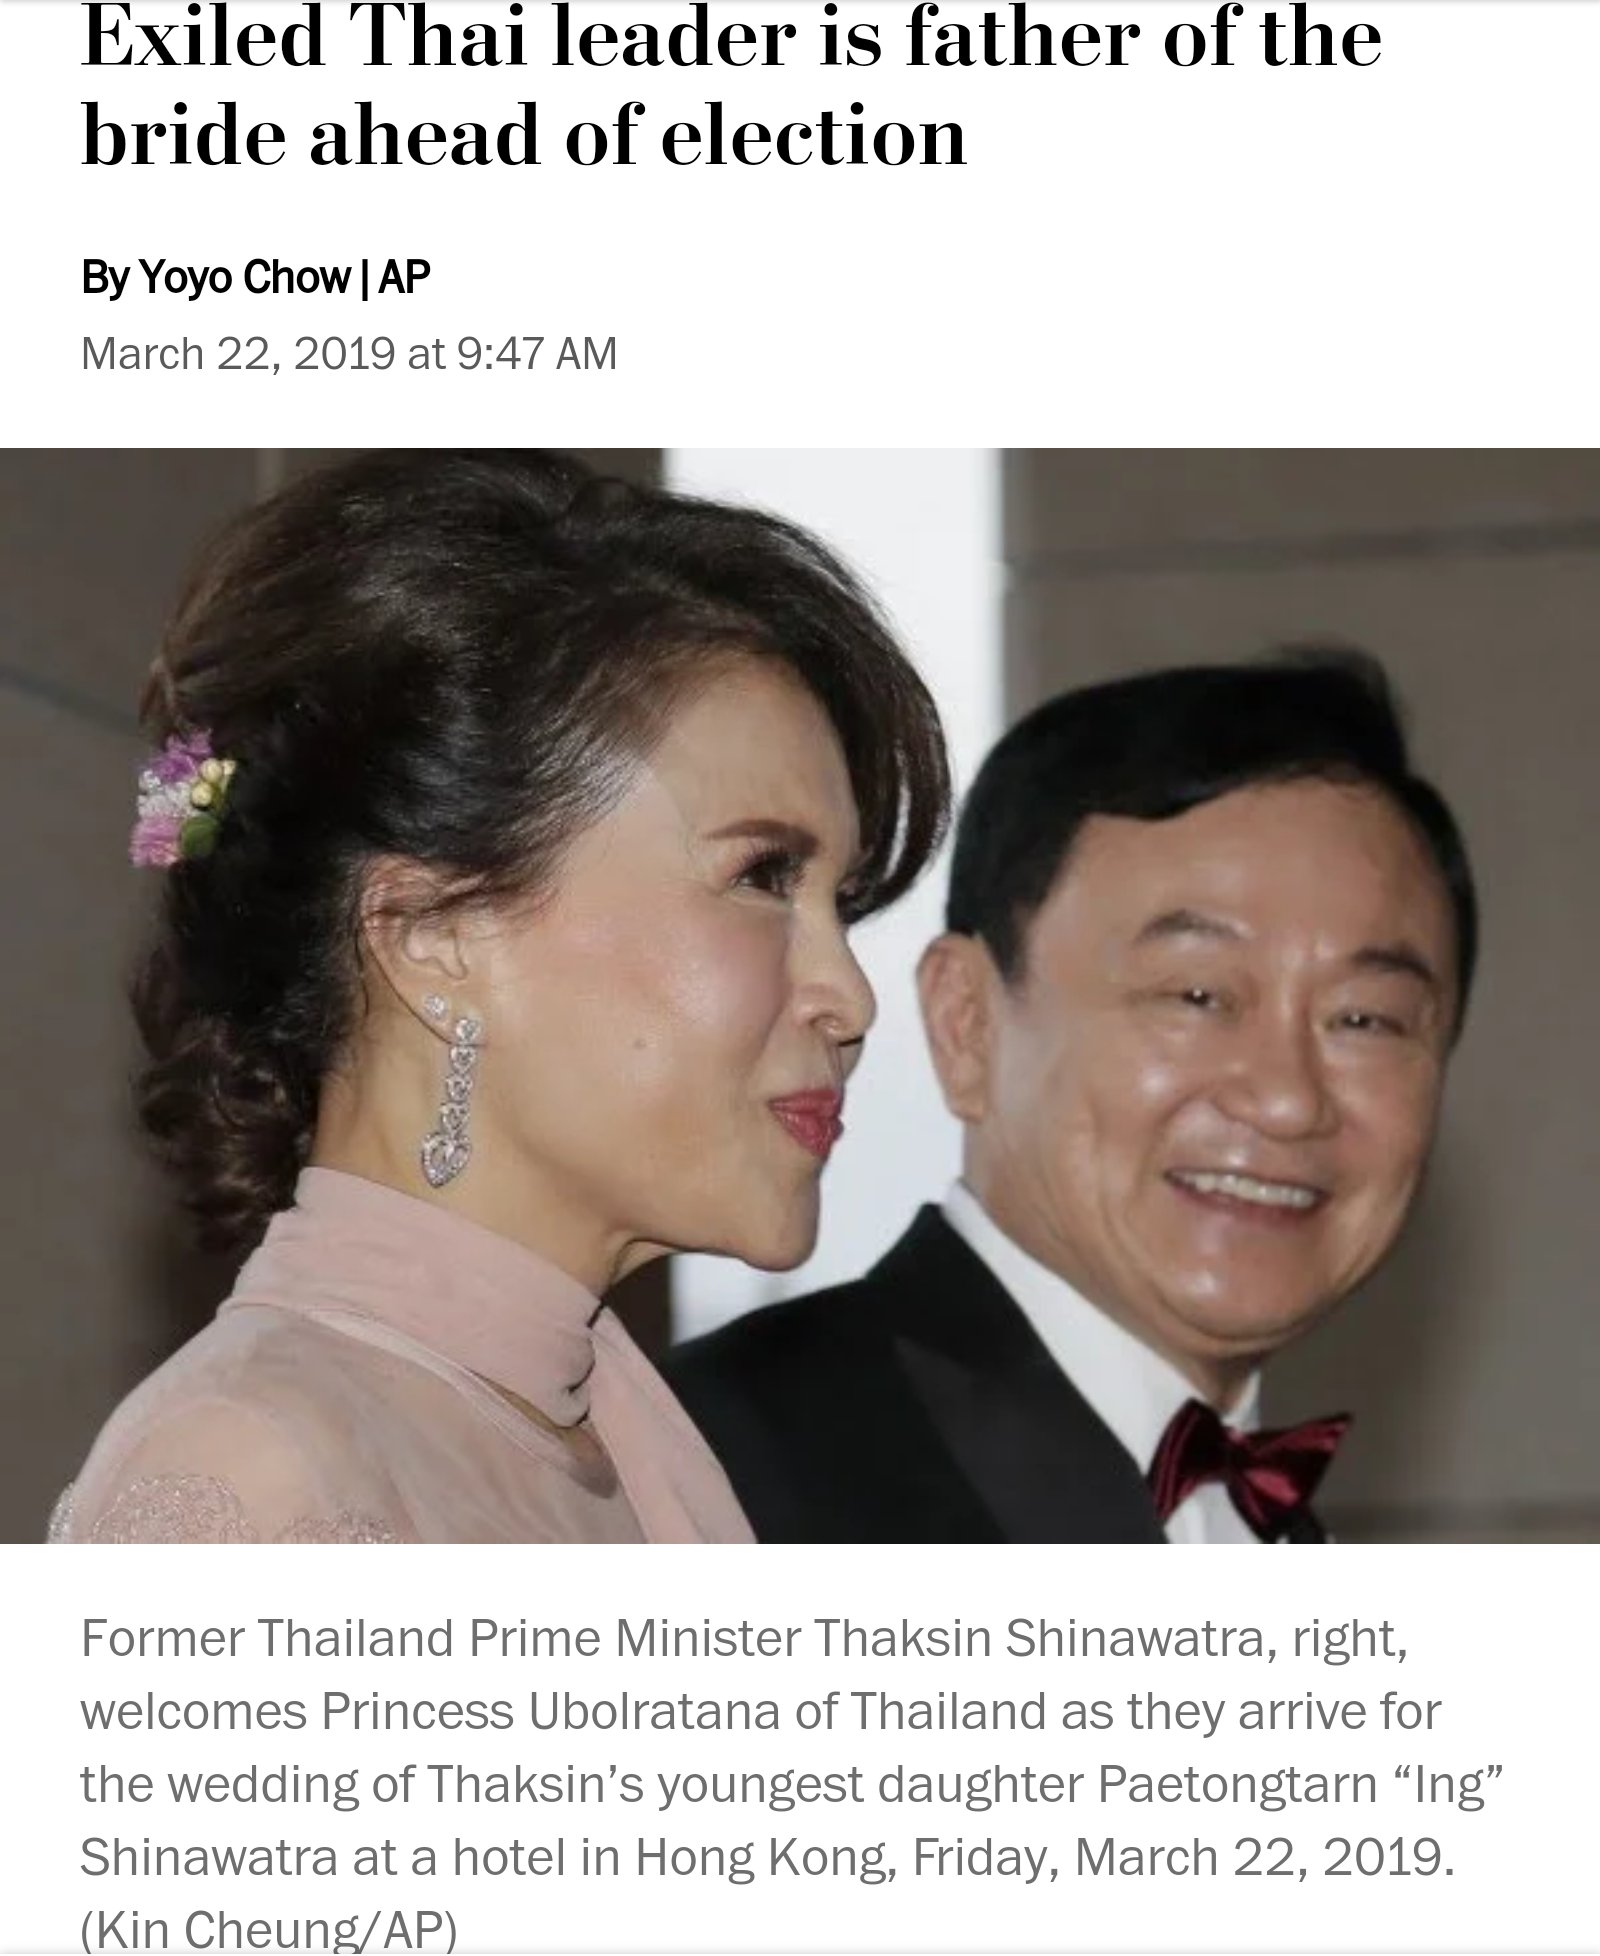 Thai Democratic Movement in Scandinavia -  ขบวนการประชาธิปไตยไทยในสแกนดิเนเวีย: พี่สาวกษัตริย์กับทักษิณที่ฮ่องกงในวันงานสมรสลูกสาว  ดูเหมือนทั้งสองมีความสุขที่น่าอิจฉาเหลือเกิน วชิราลงกรณ์น้องชายคงดีใจมาก ...